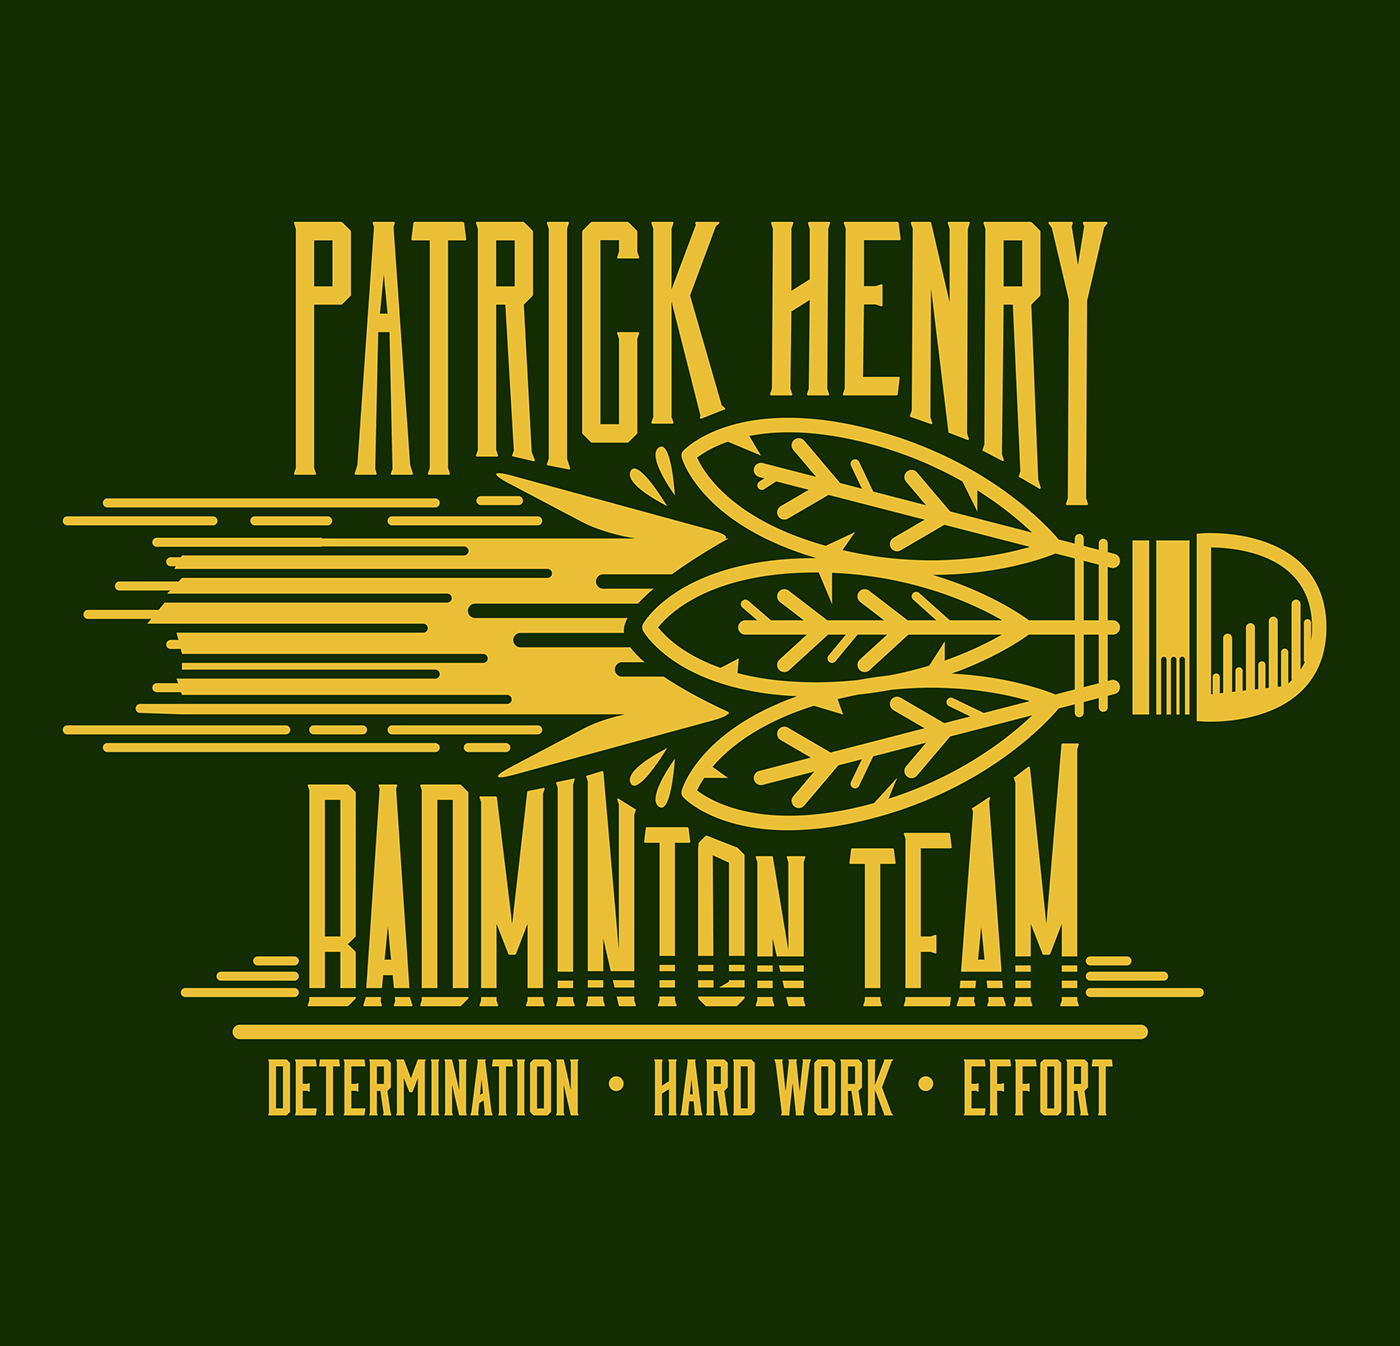 badminton High School team badge t-shirt shirt silkscreen Patrick Henry badminton team Patriots birdie TEAMWORK hardwork effort determination